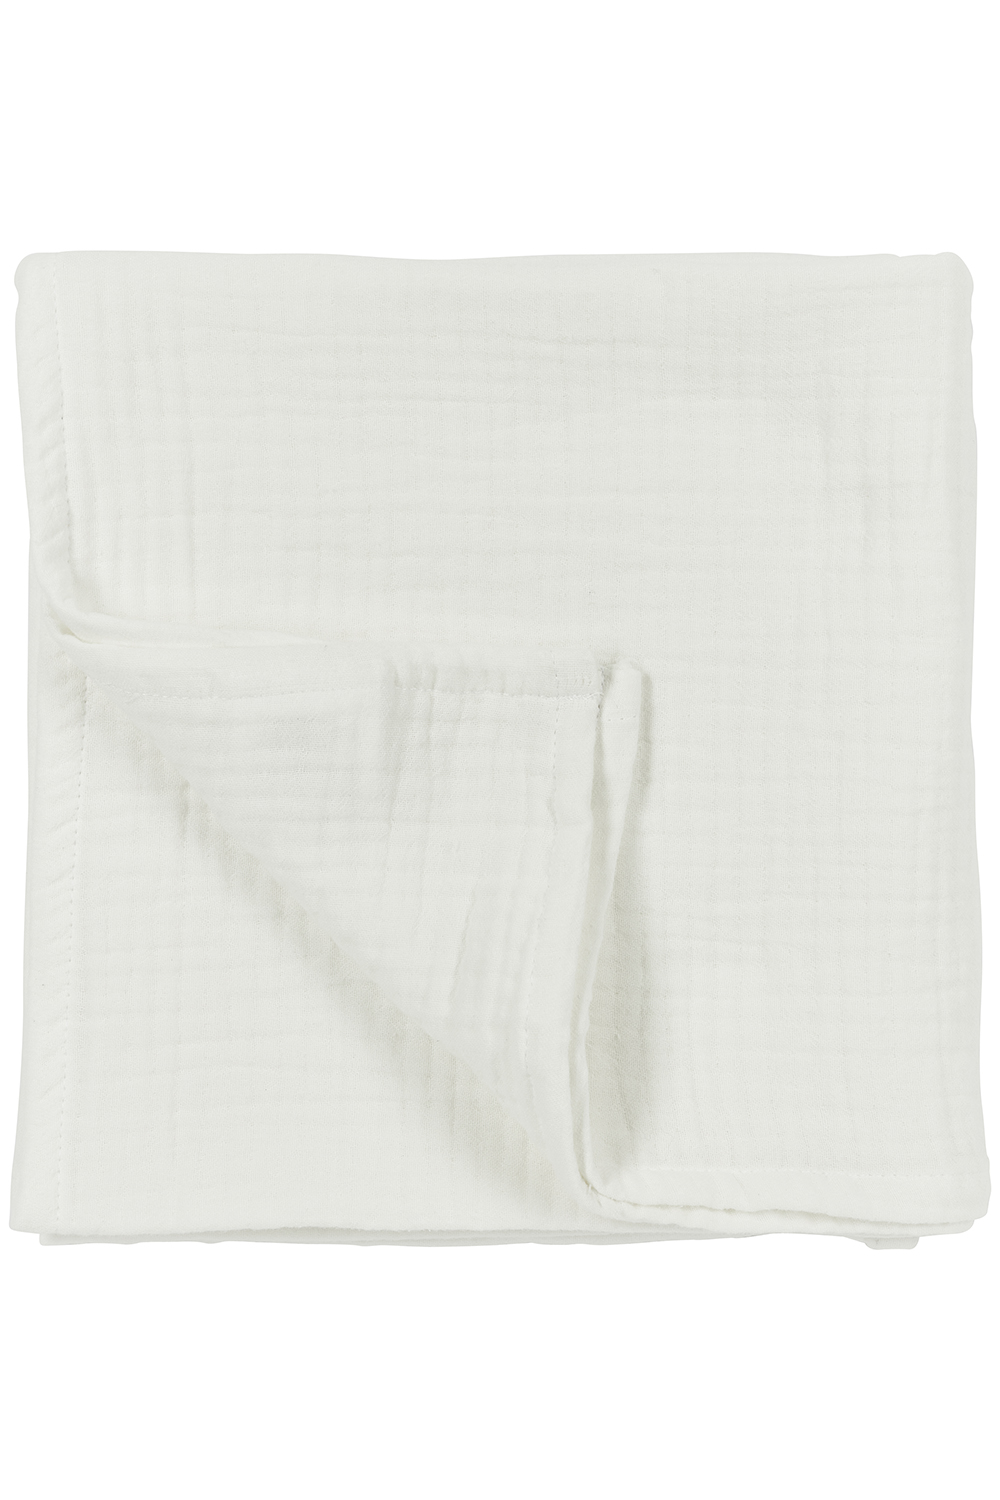 Blanket pre-washed muslin Uni - offwhite - 140x200cm